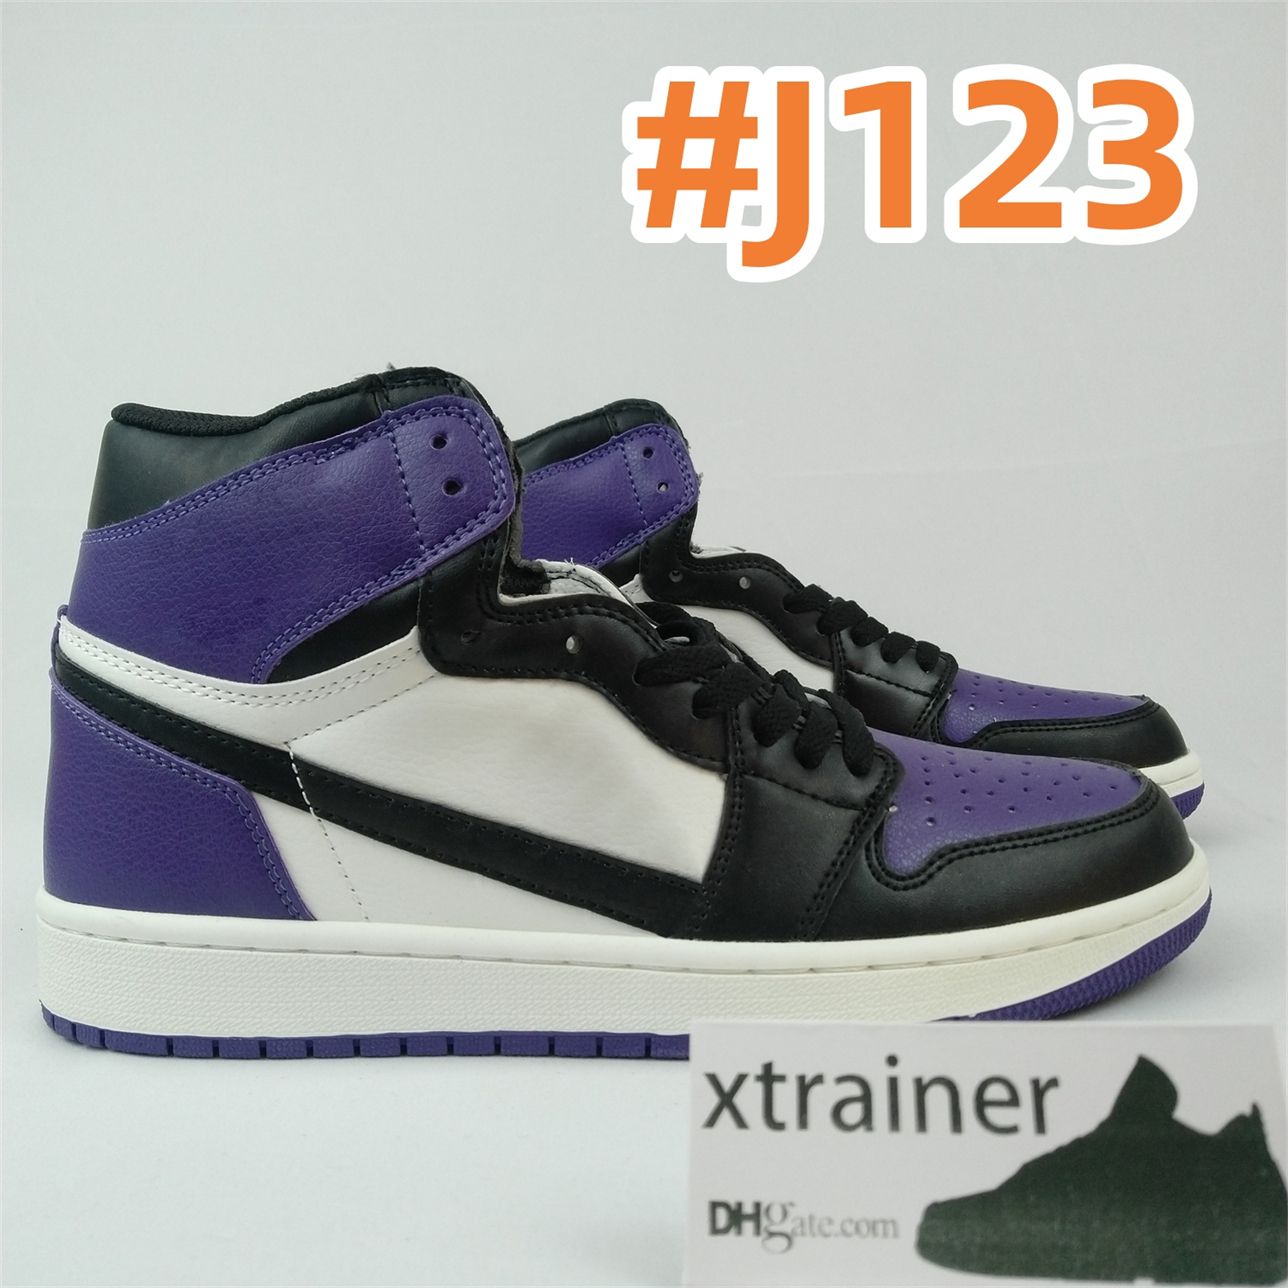 #J123